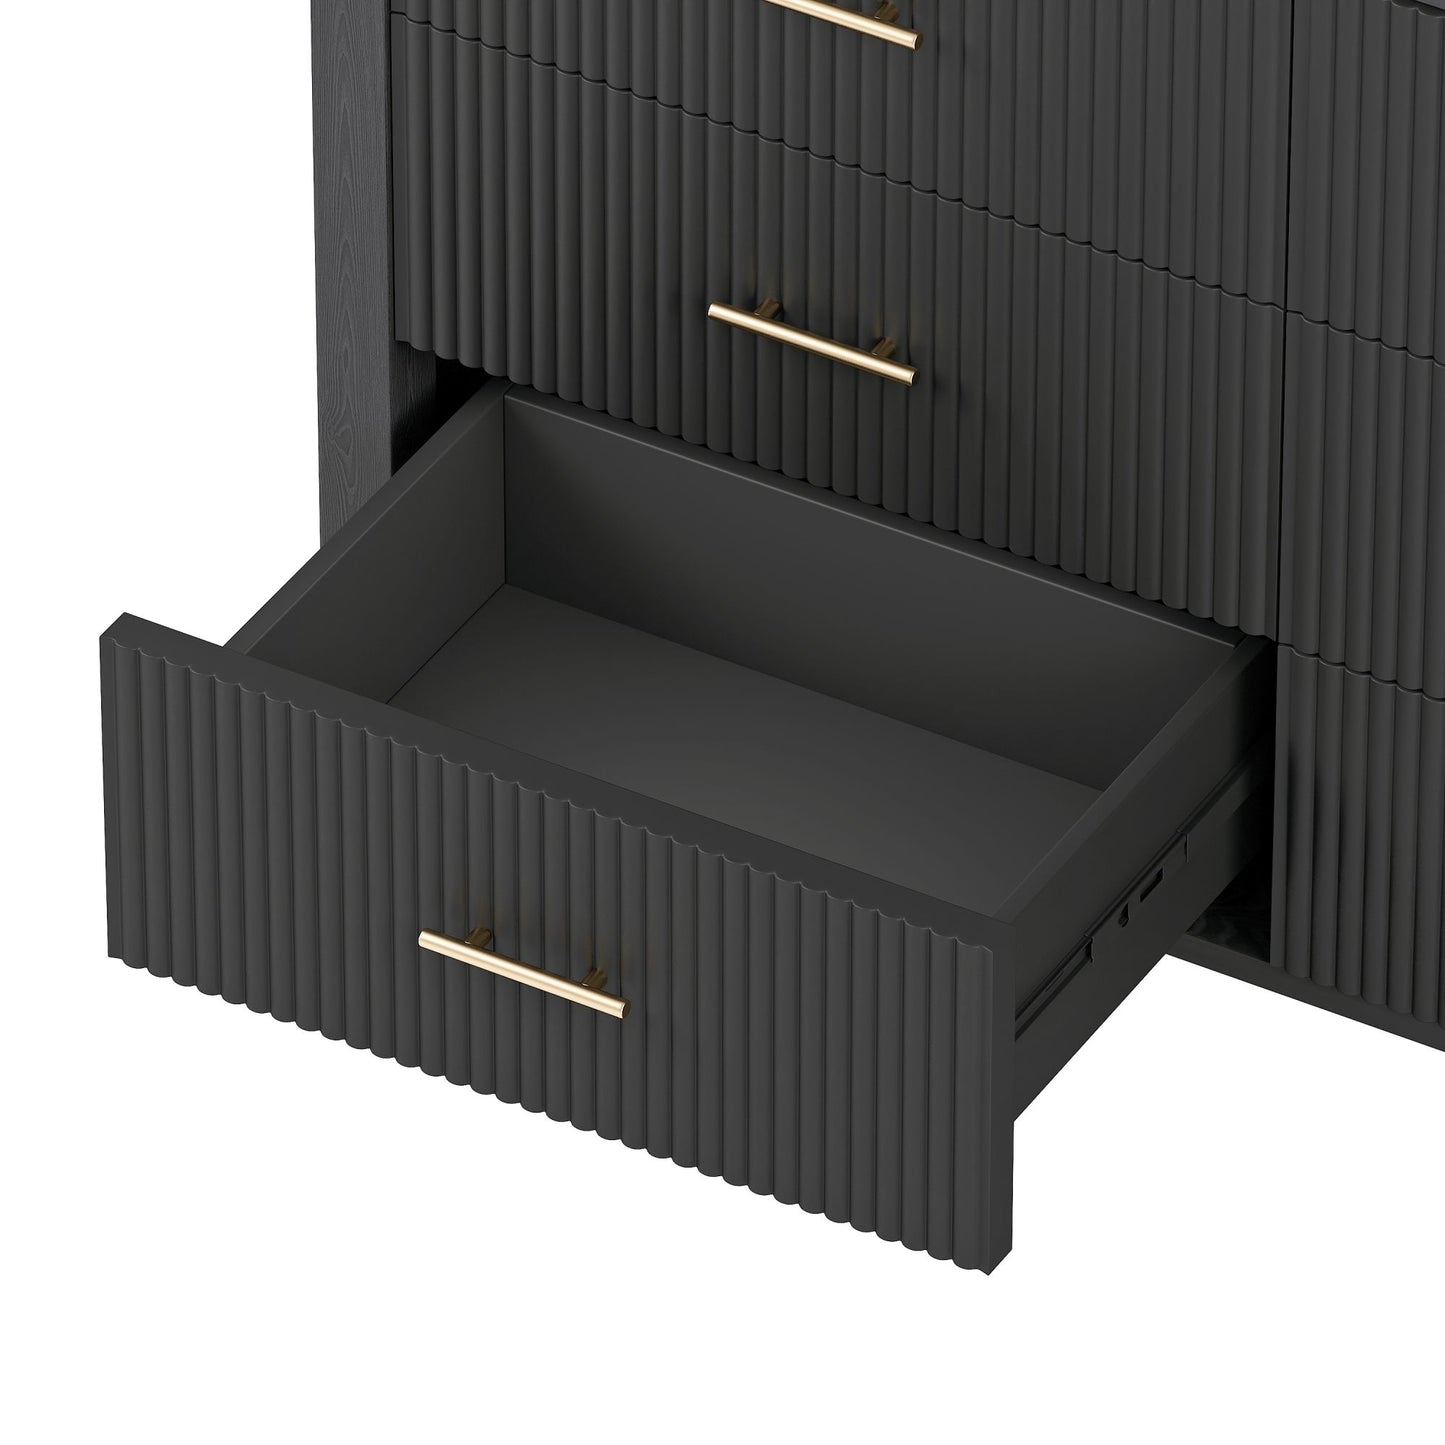 6 drawer dresser with metal handle, black